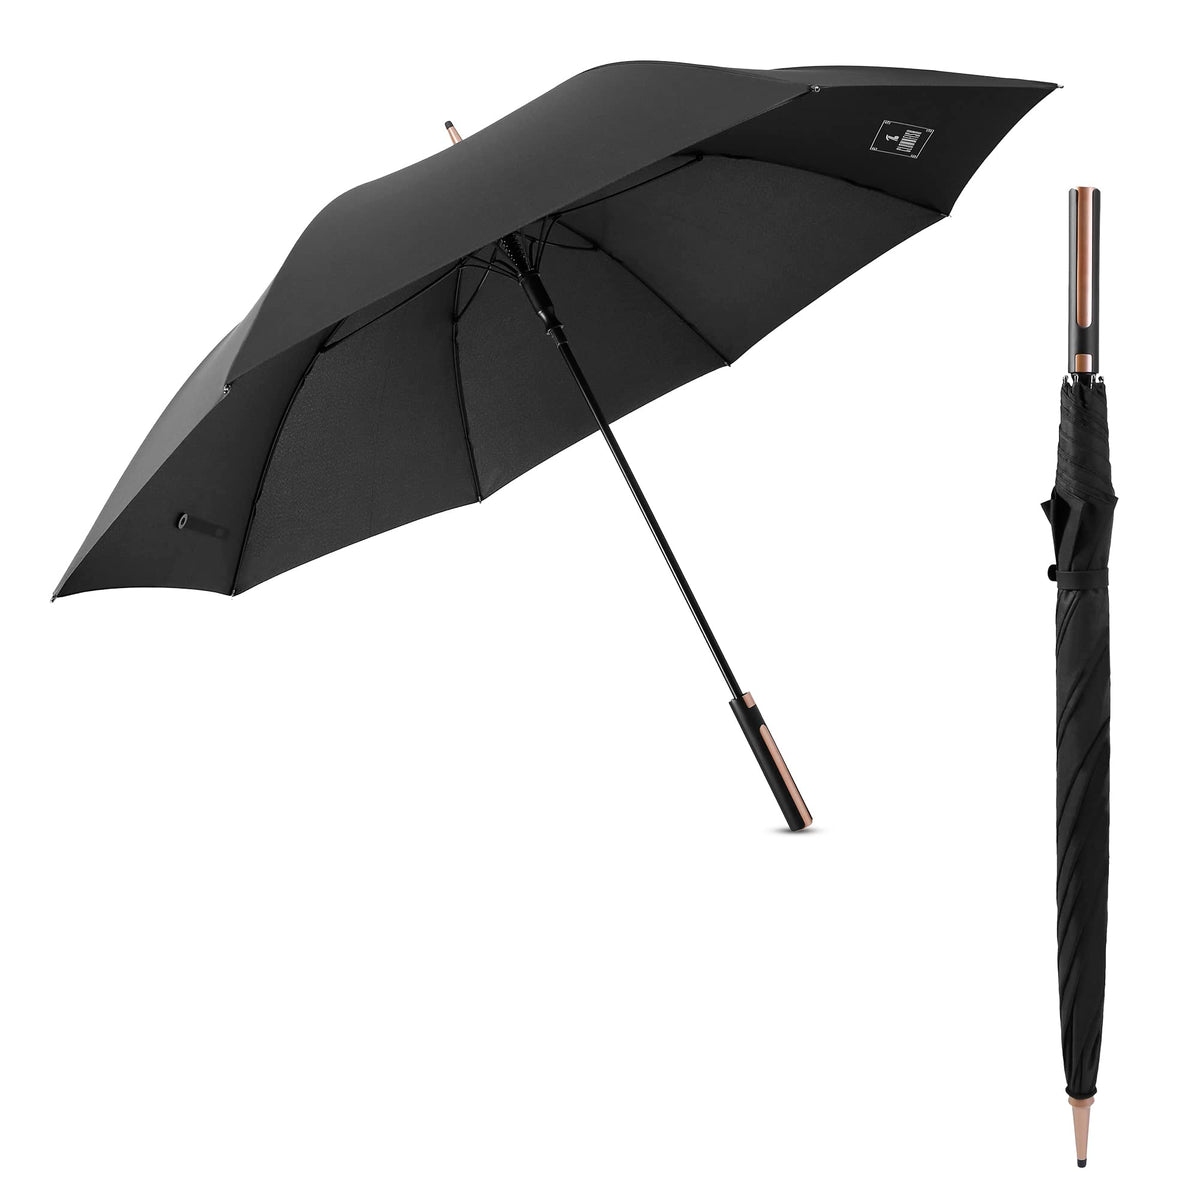 STRAUSS THE CLOWNFISH Umbrella Brianna Series Single Fold Auto Open Straight Handle Waterproof Pongee Umbrellas For Men and Women (Black)